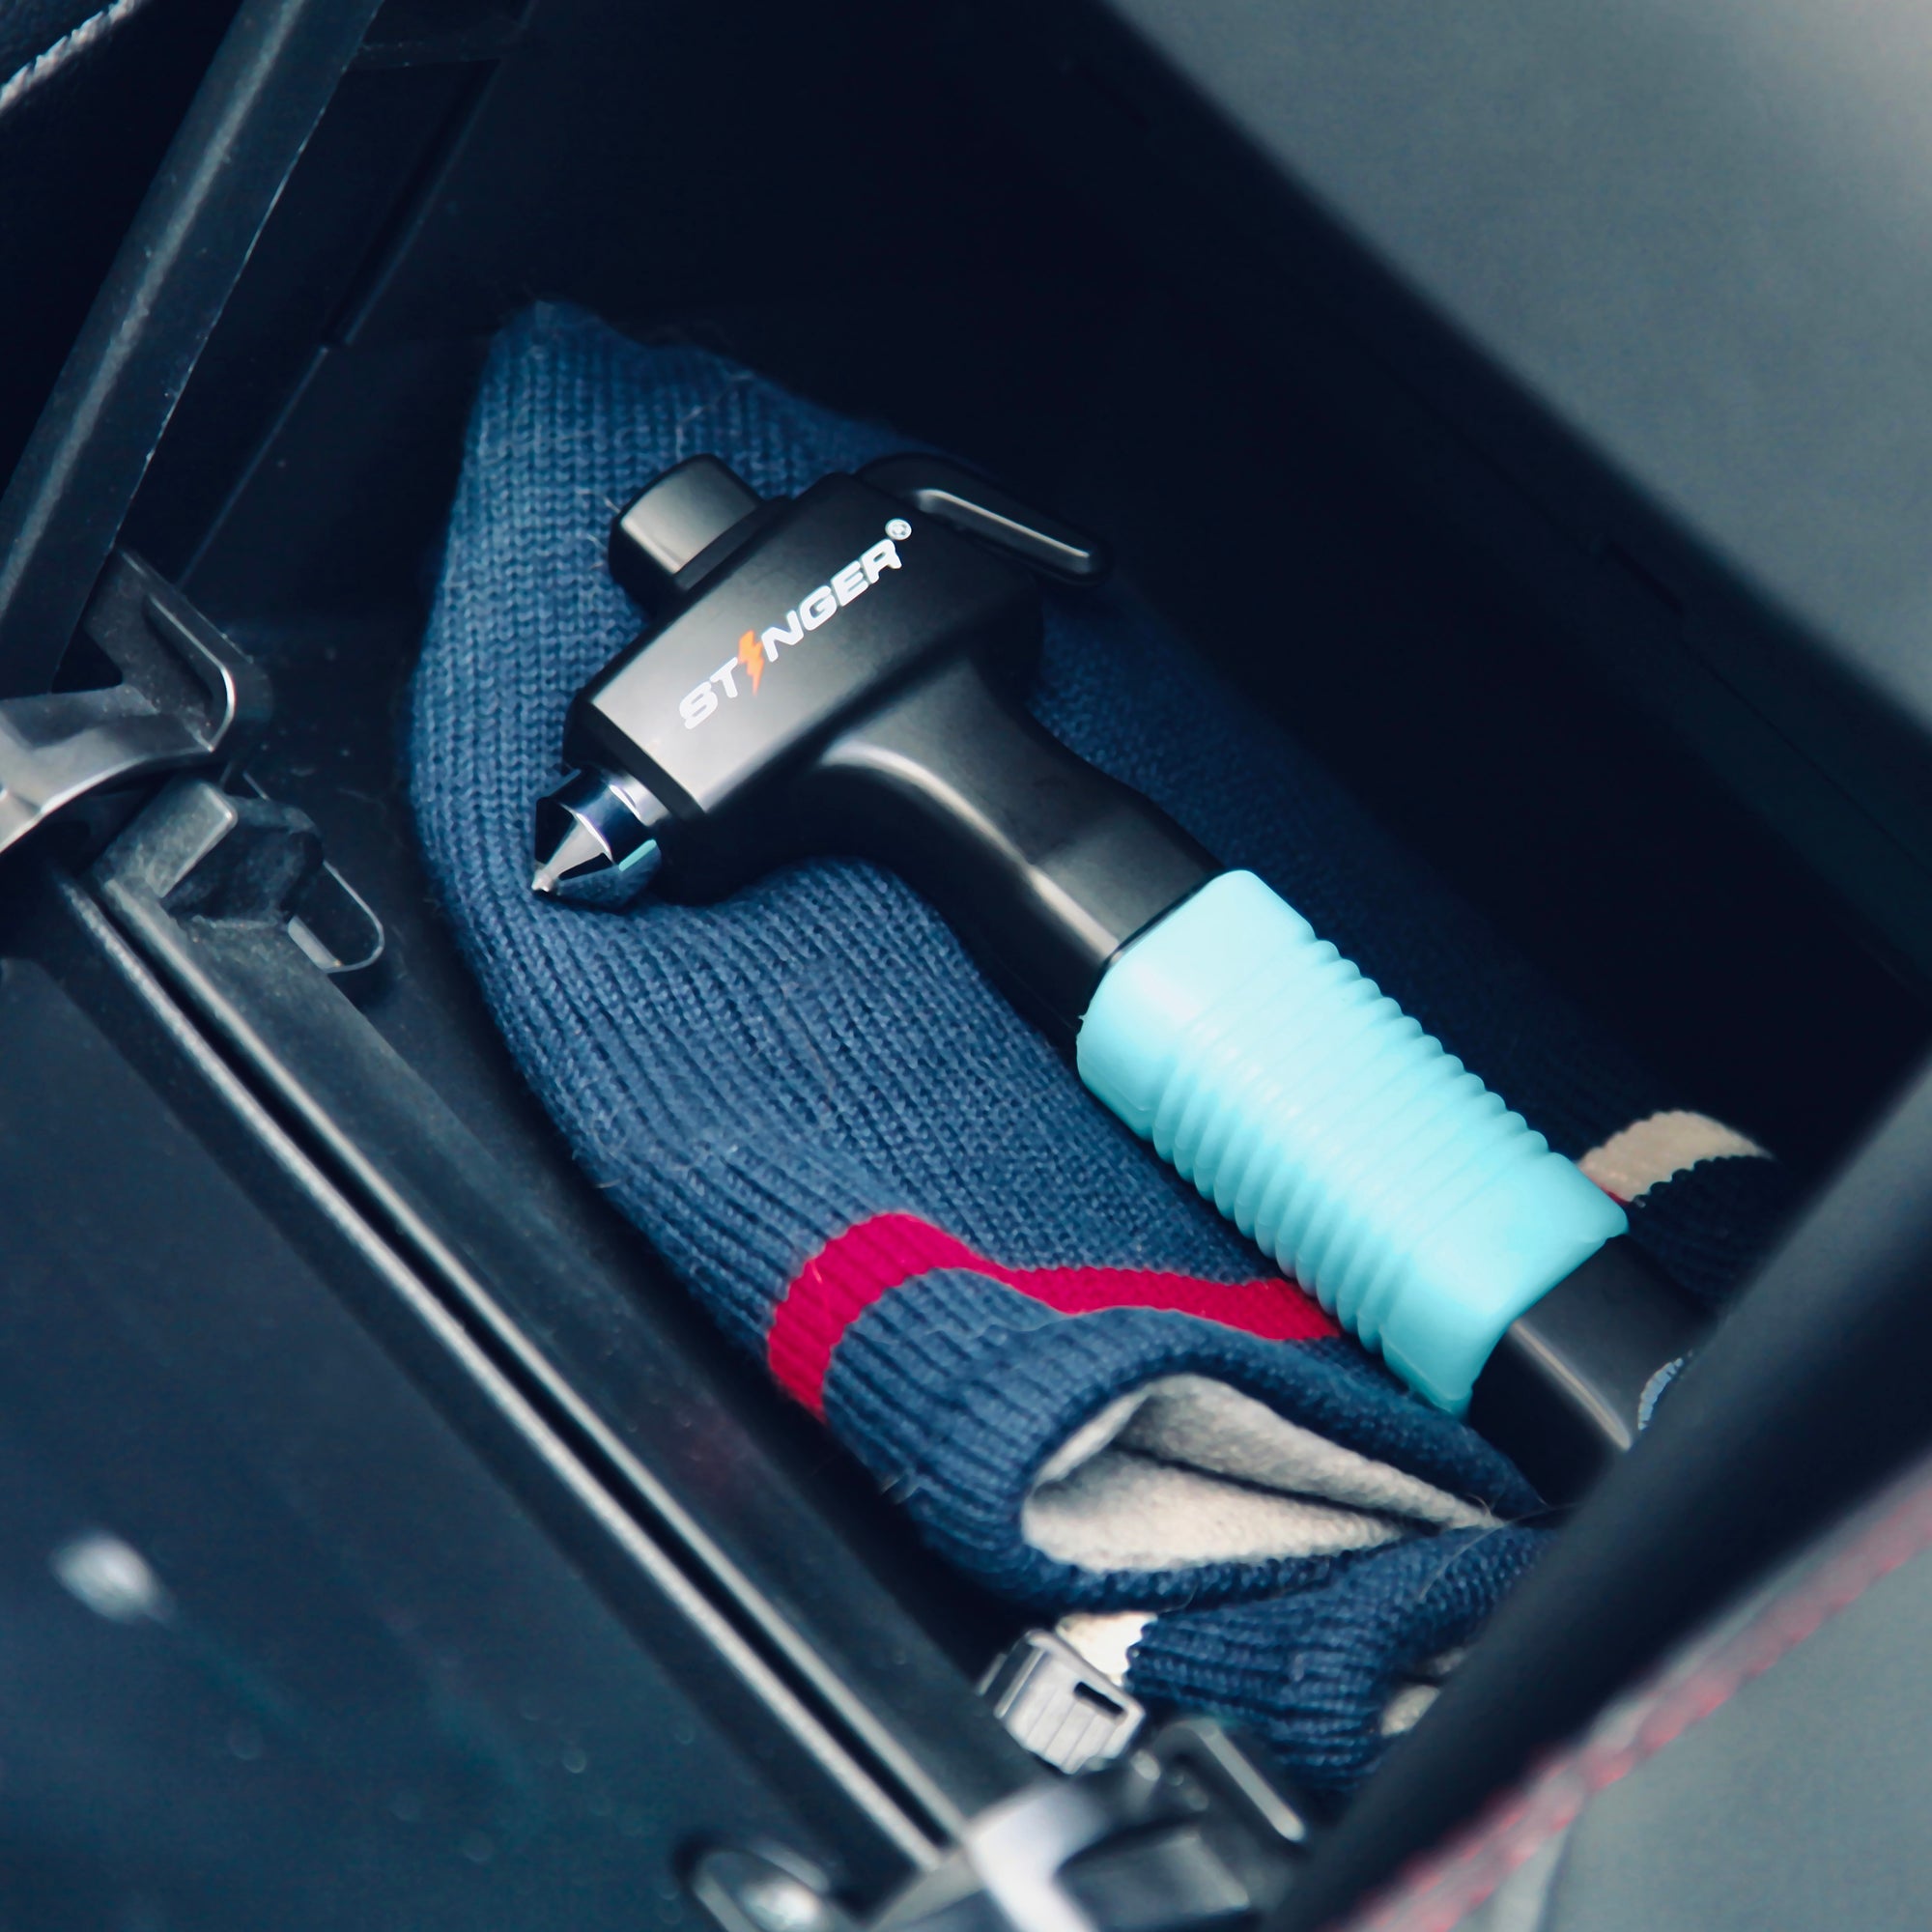 Stinger Super Duty Car Emergency Escape Hammer, Seatbelt Cutter